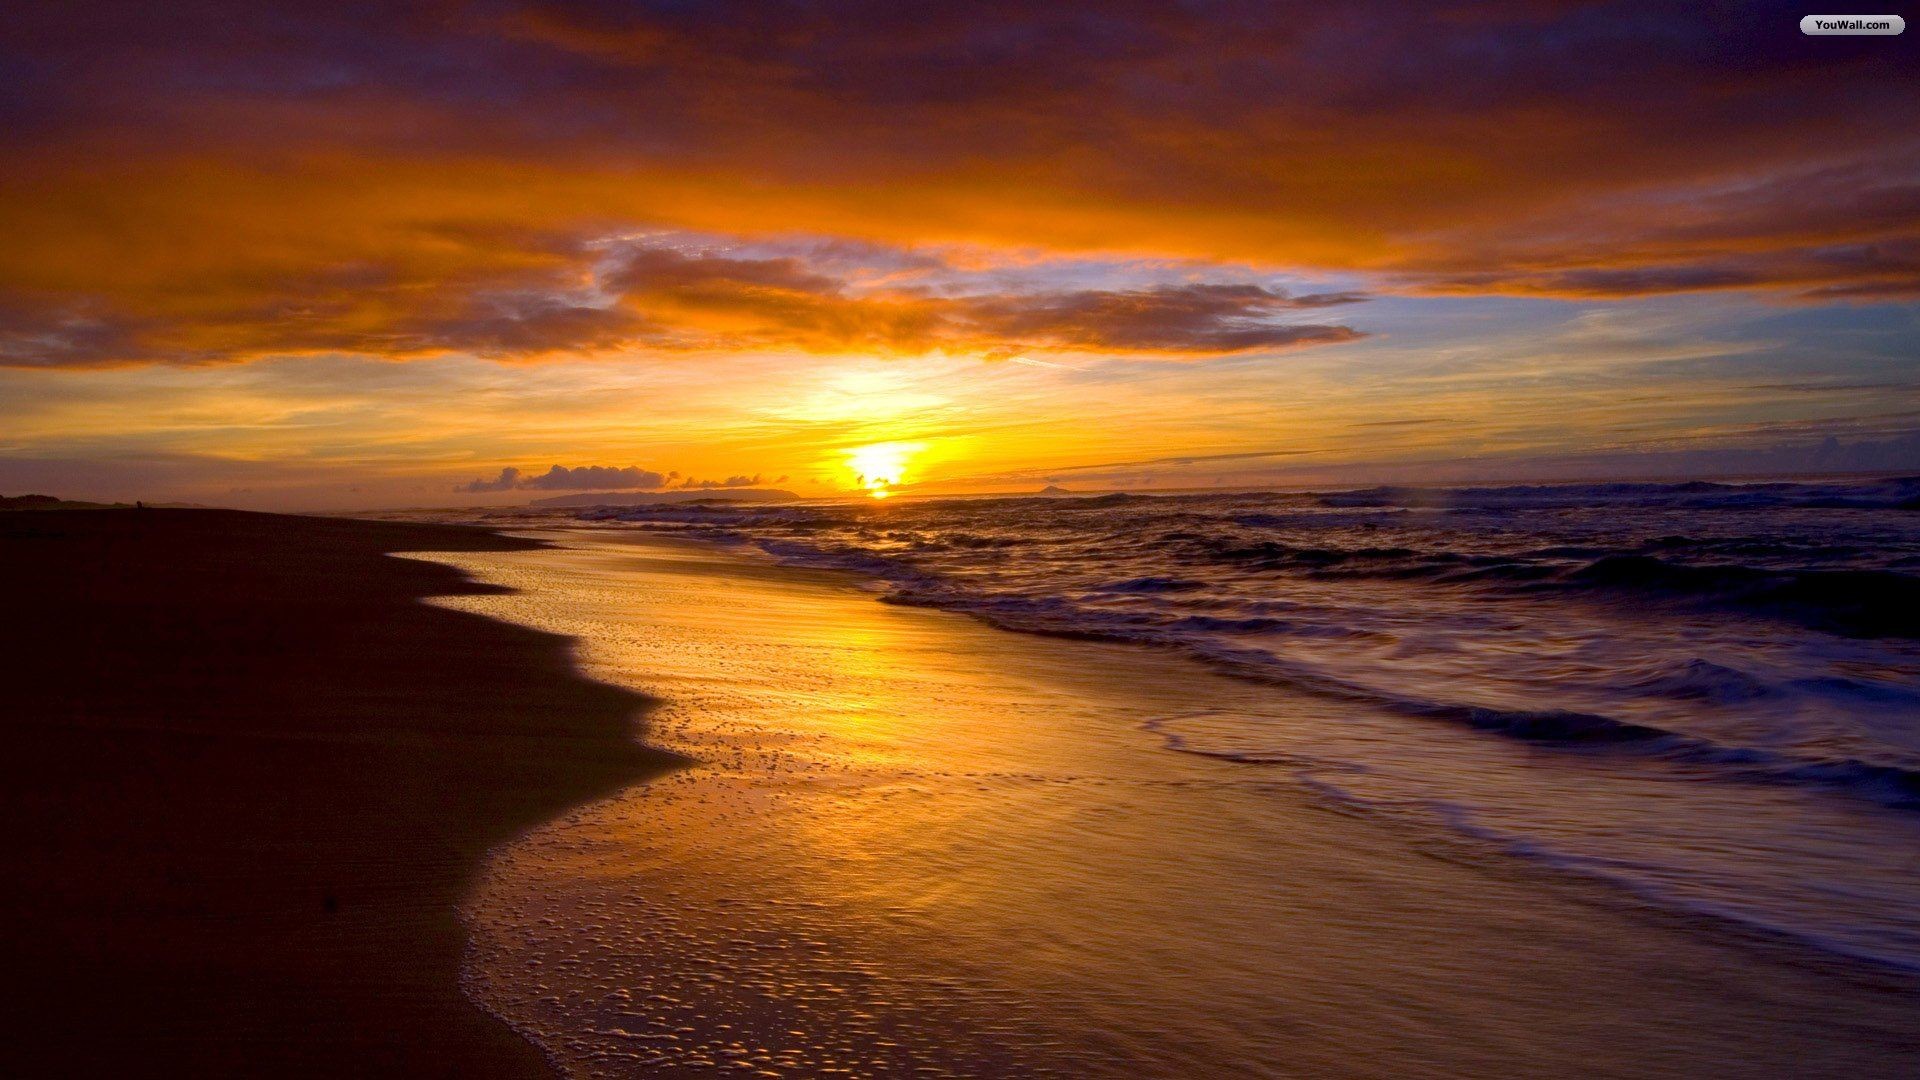 1920x1080 Beach Sunset Image For Desktop Wallpaper 1920 x 1080 px 623.08 KB romantic  iphone beautiful waves